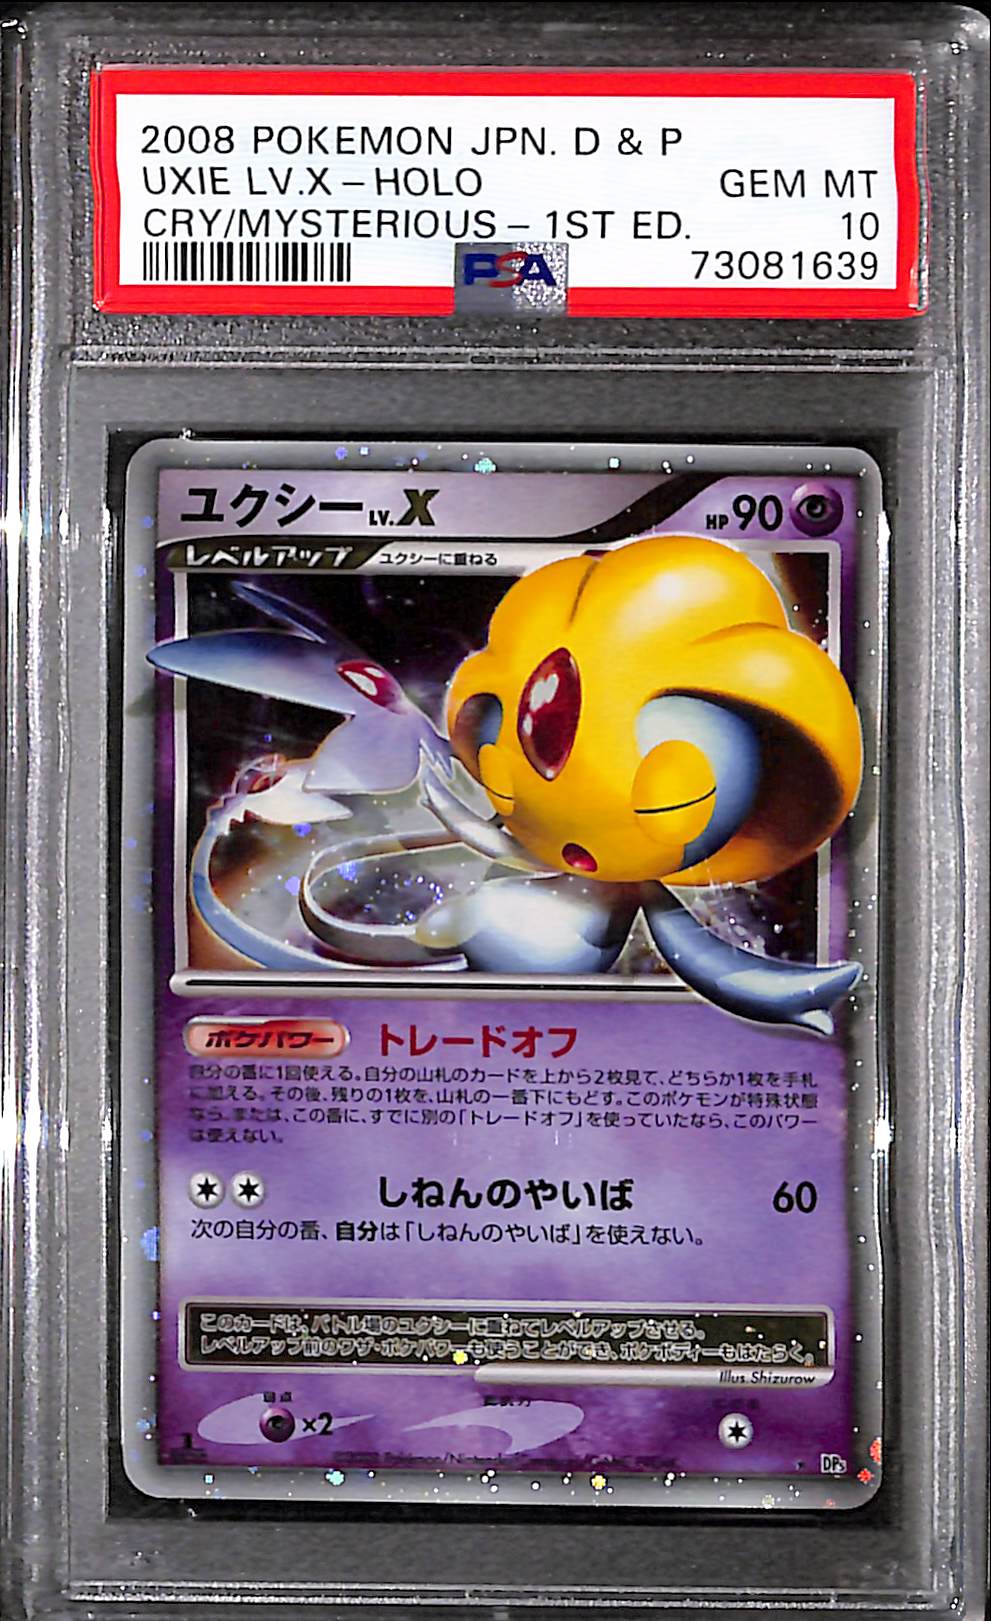 PSA10 - 2008 Pokemon Japanese - Uxie LV.X Holo - Cry/Mysterious 1st Edition - TCGroupAU